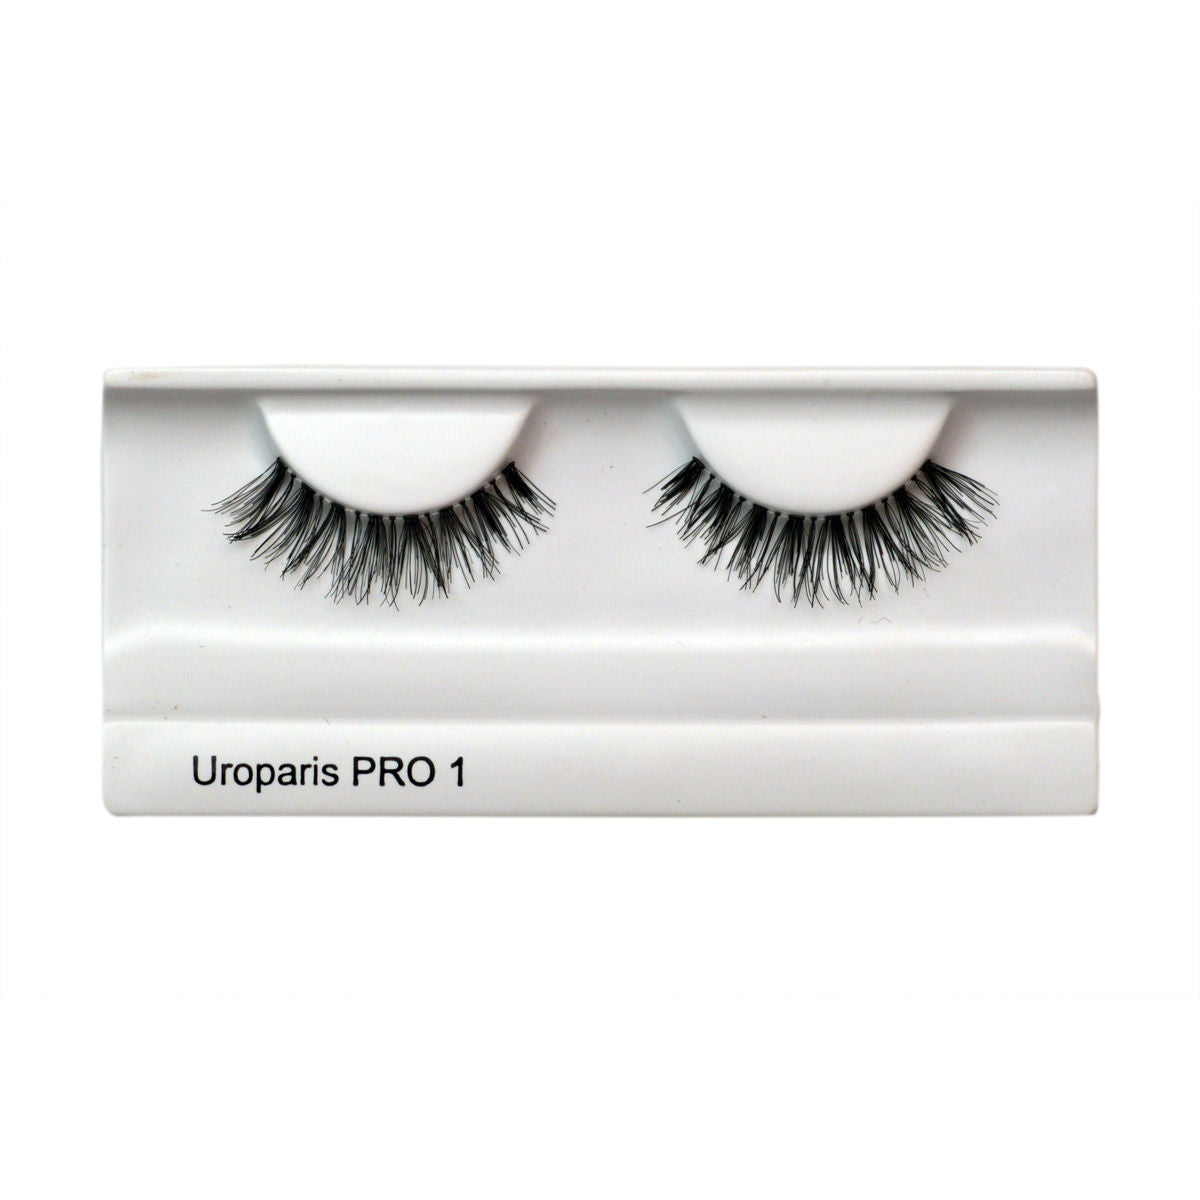 Uroparis False Eyelashes Pro 1 Black (1 pair) Uroparis